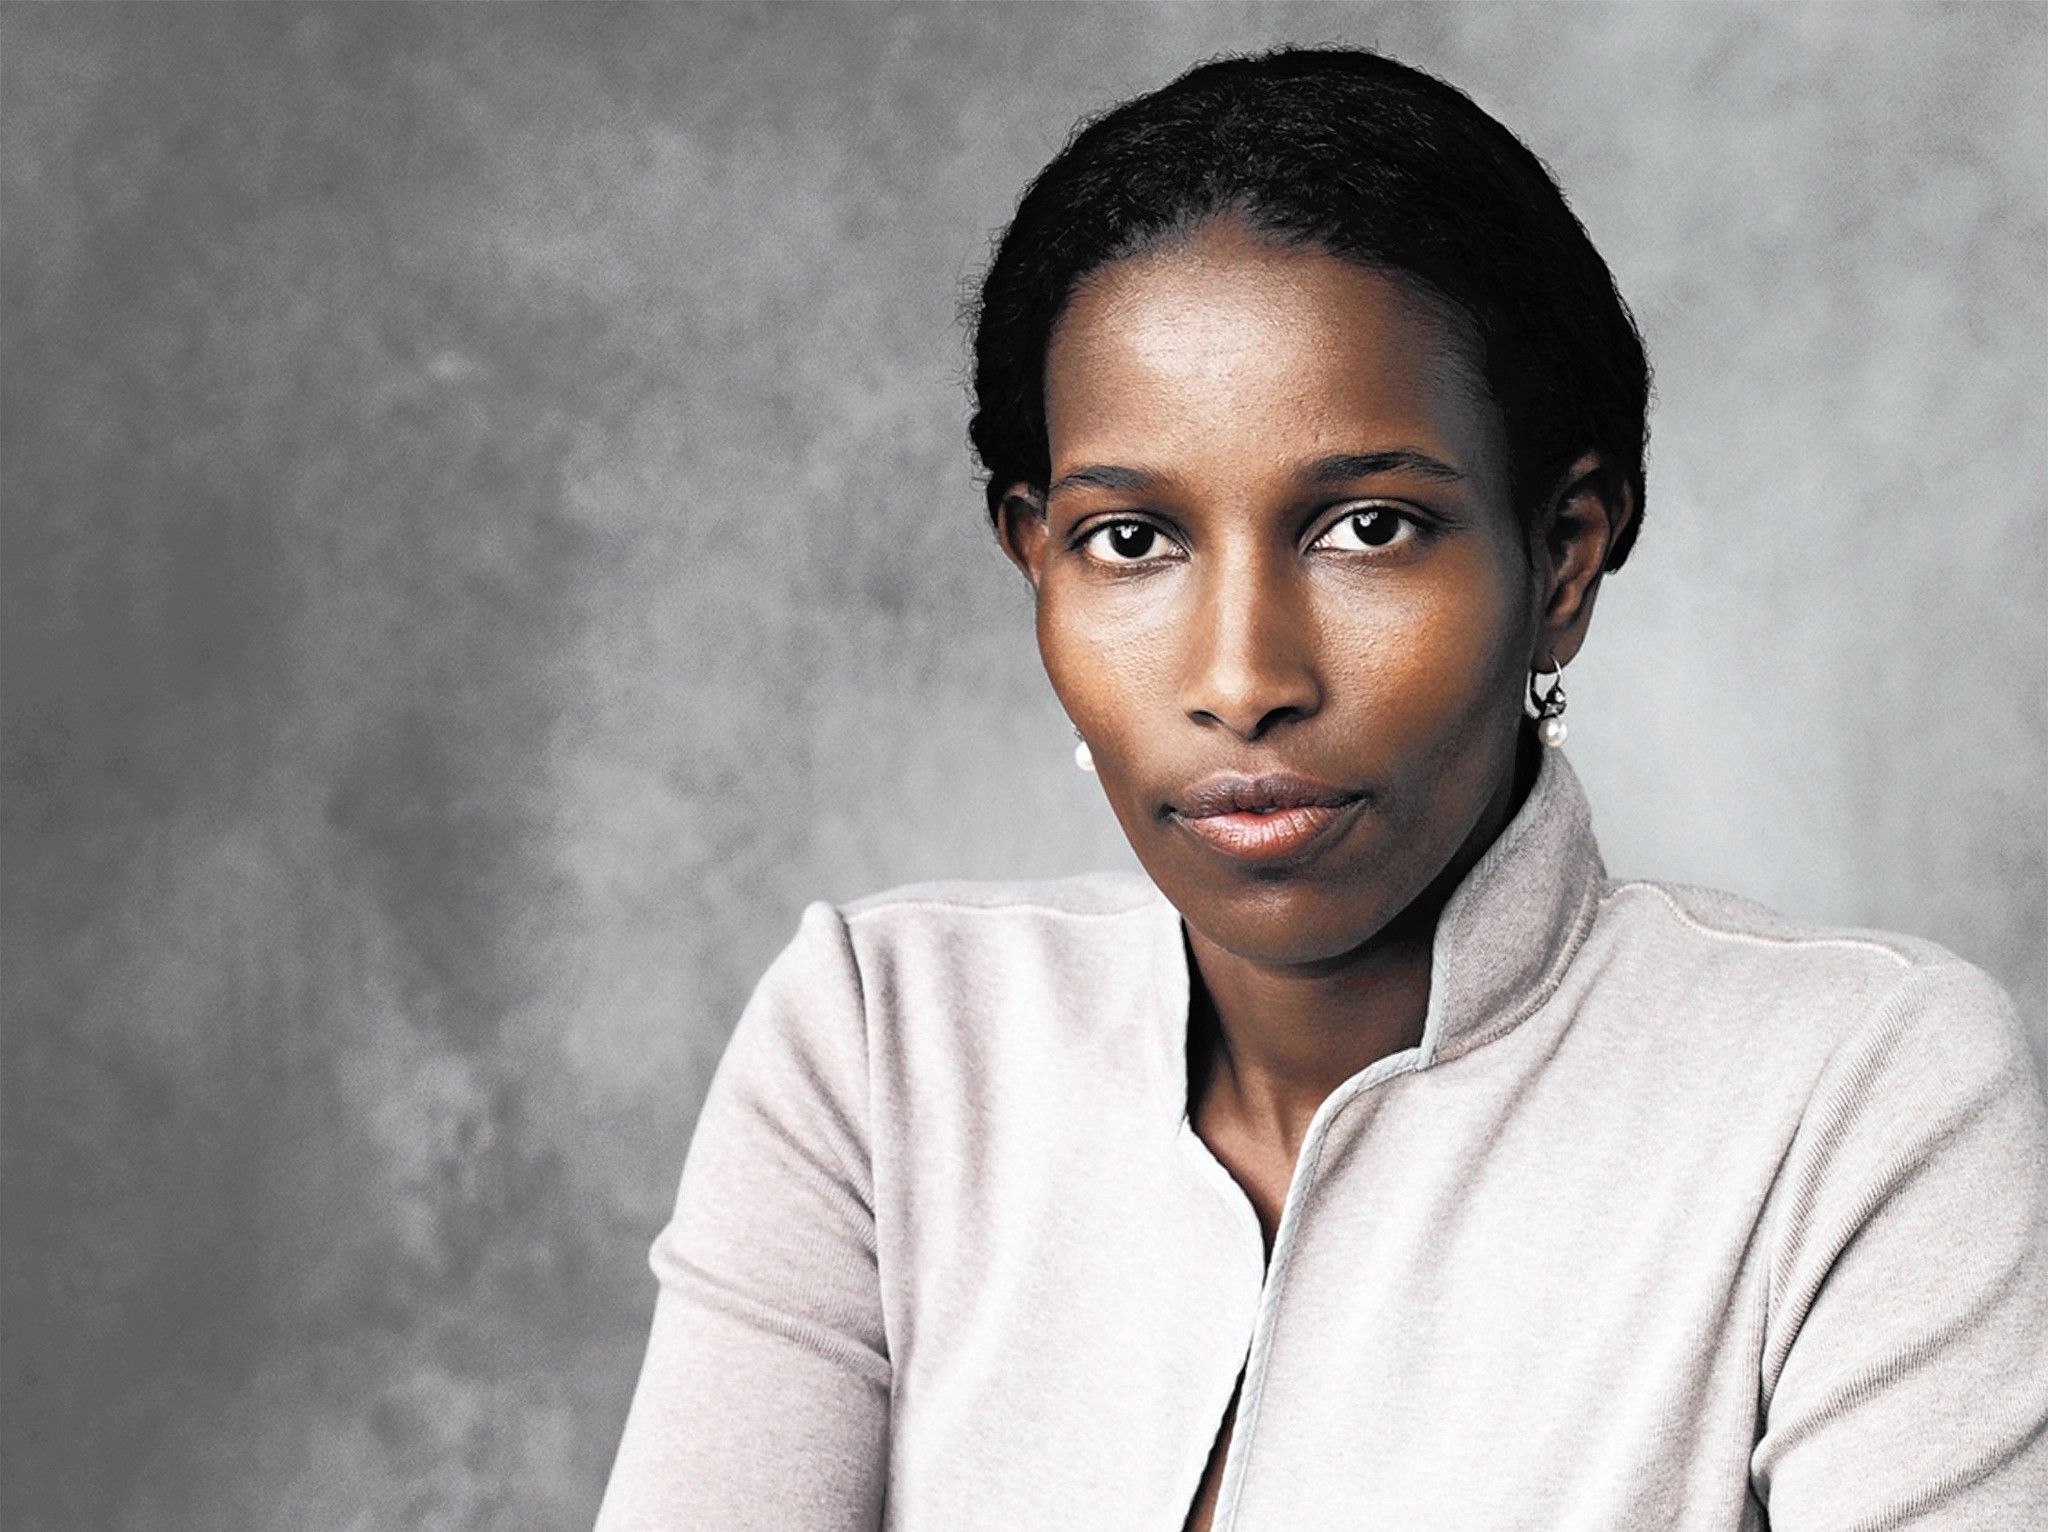 Belajar dari ‘Kemurtadan’ Perempuan; Refleksi Buku Biografi Ayaan Hirsi Ali (Part II)